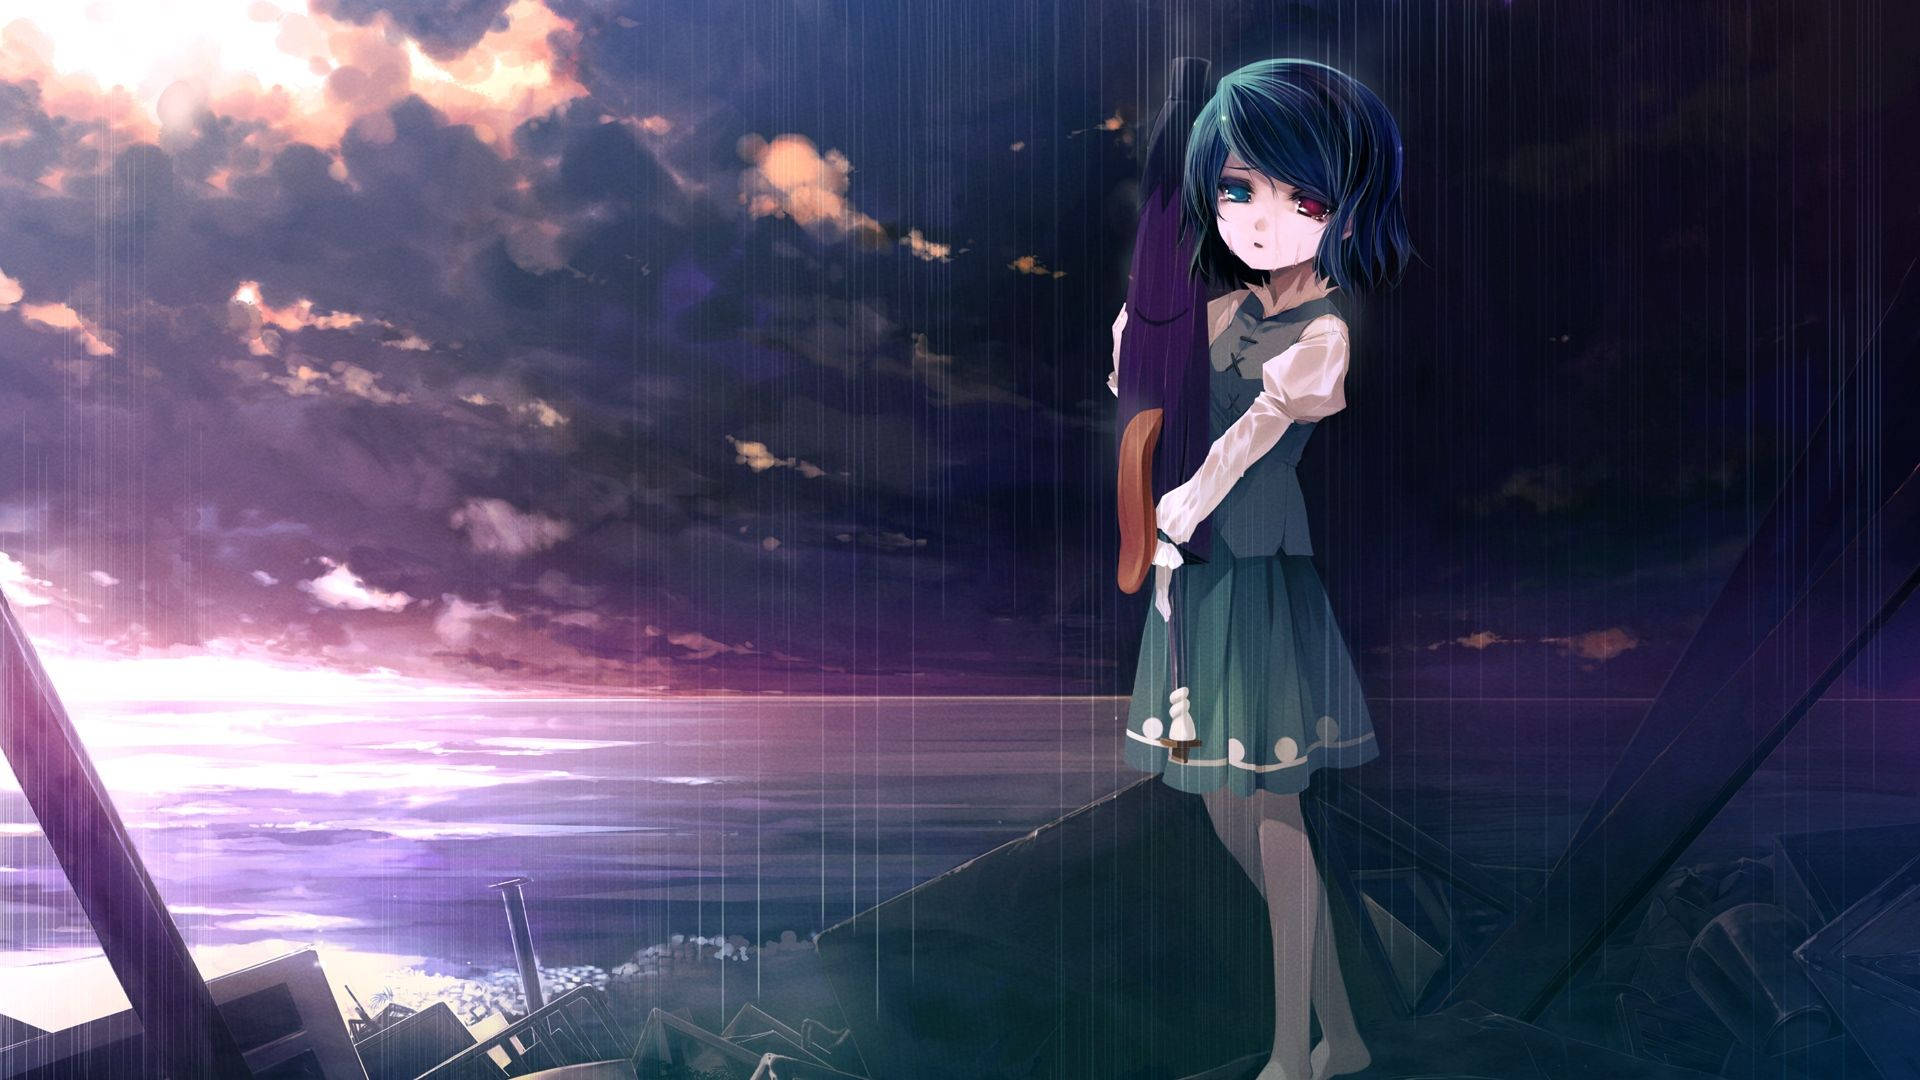 Sad Anime 1920X1080 Wallpaper and Background Image